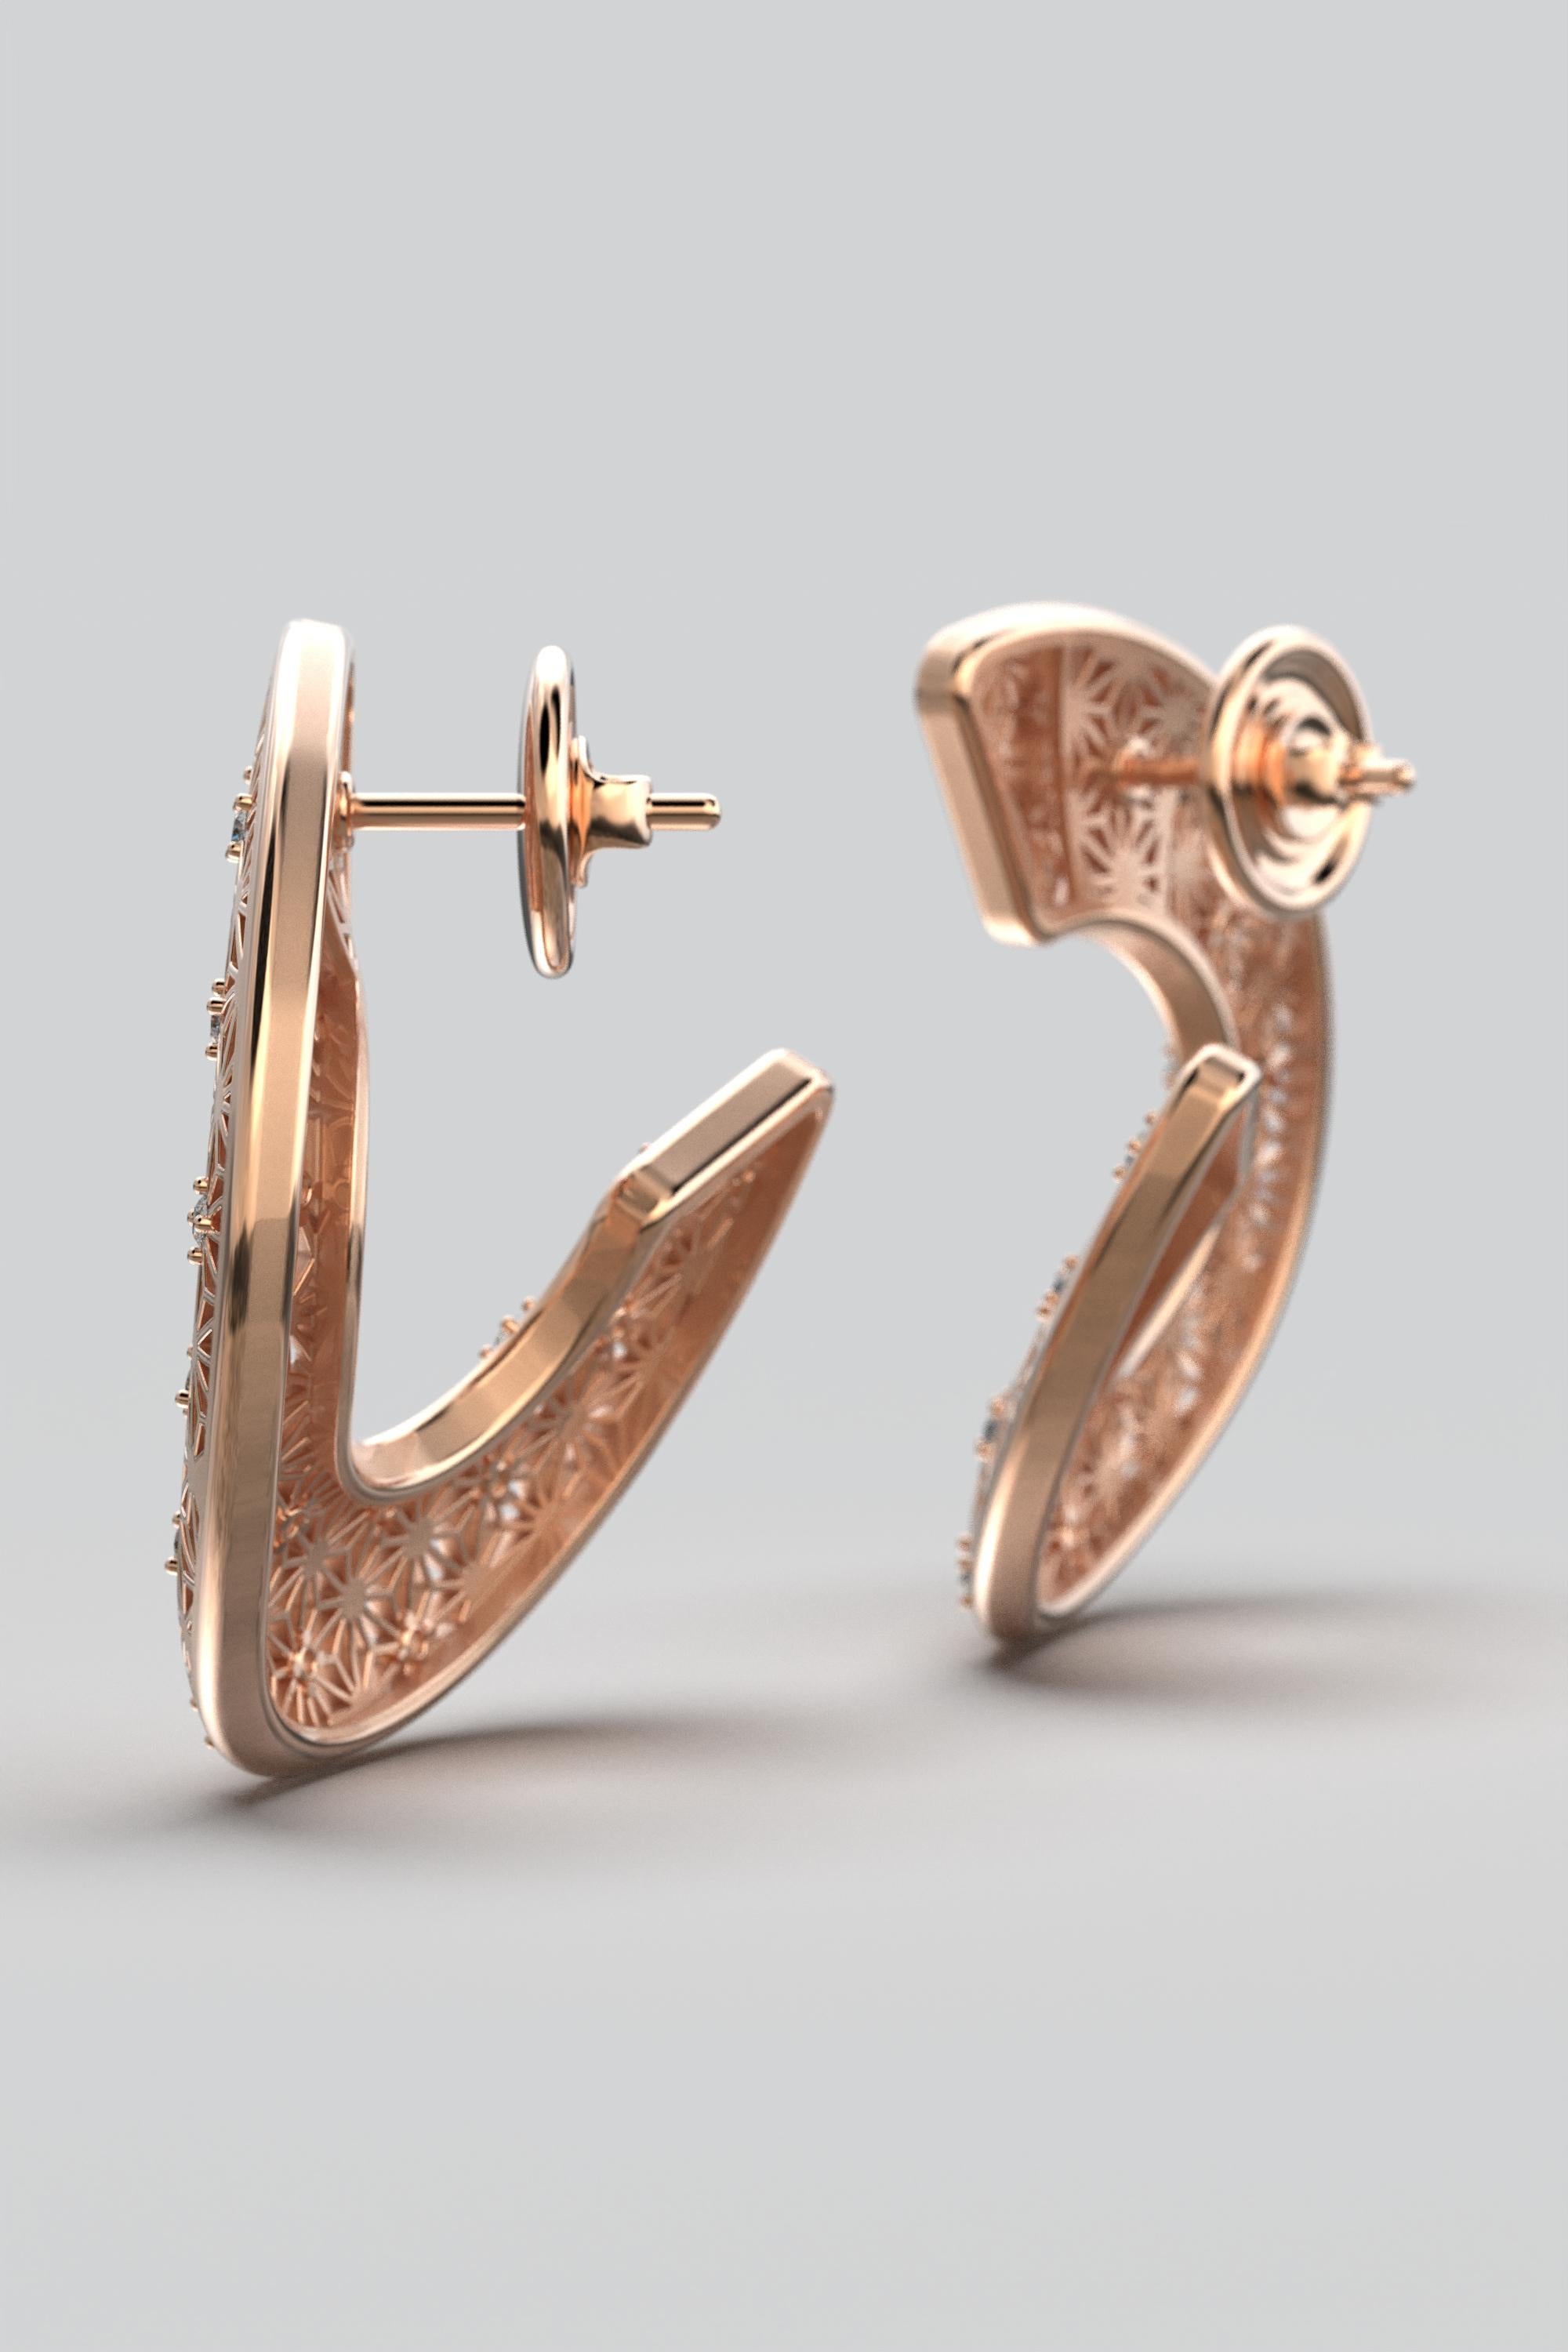 Statement Italian Diamond Earrings in 14k Genuine Gold by Oltremare Gioielli For Sale 2